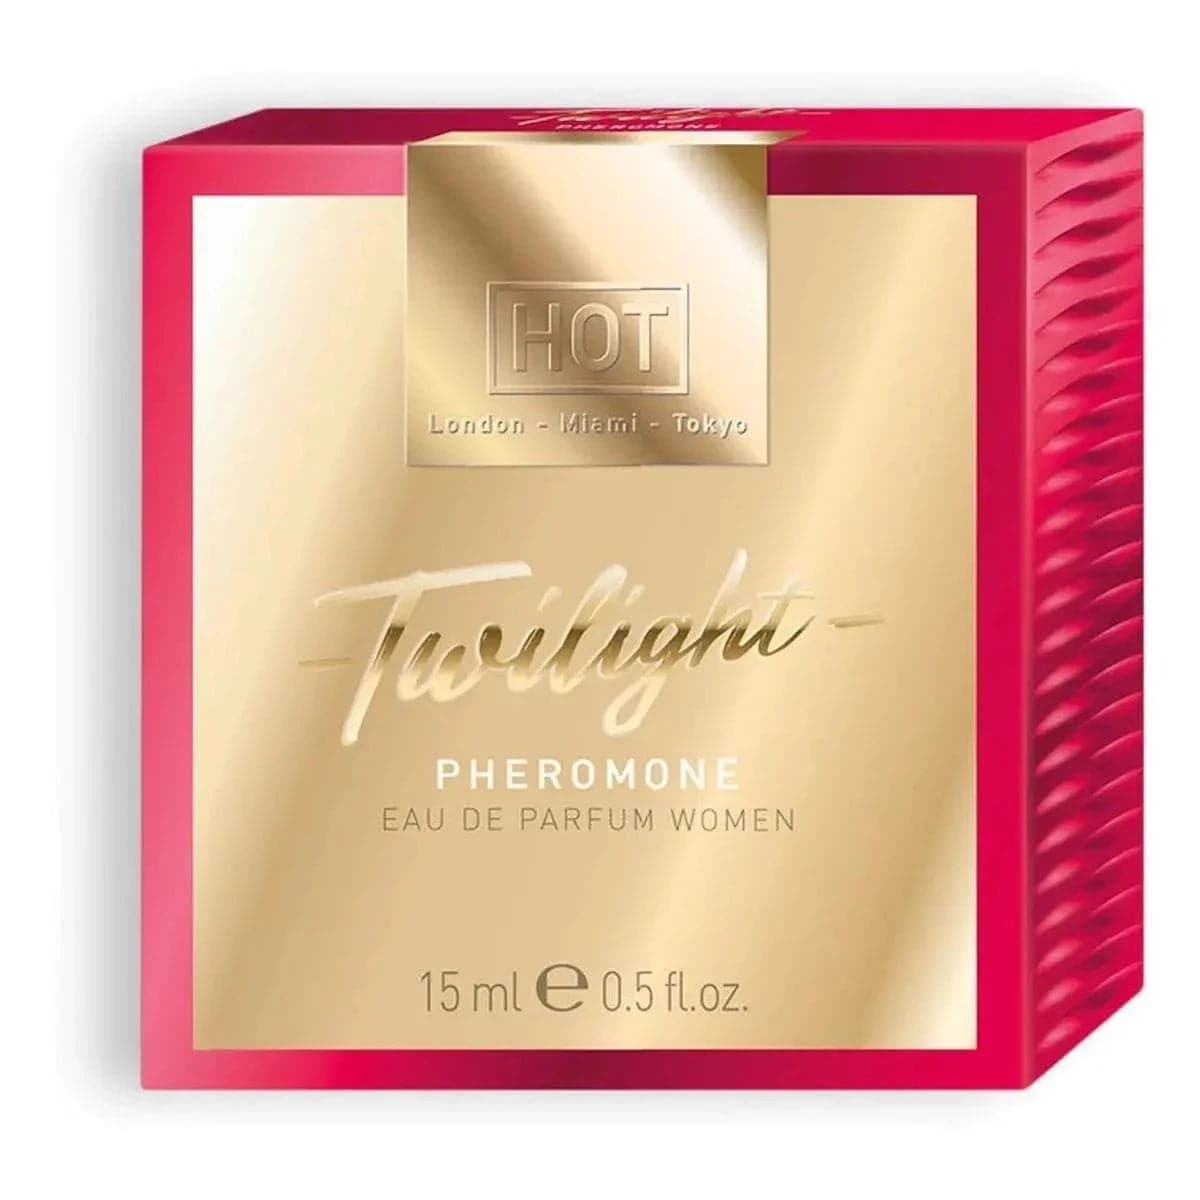 Perfume Mulher com Feromonas, Twilight 15ml